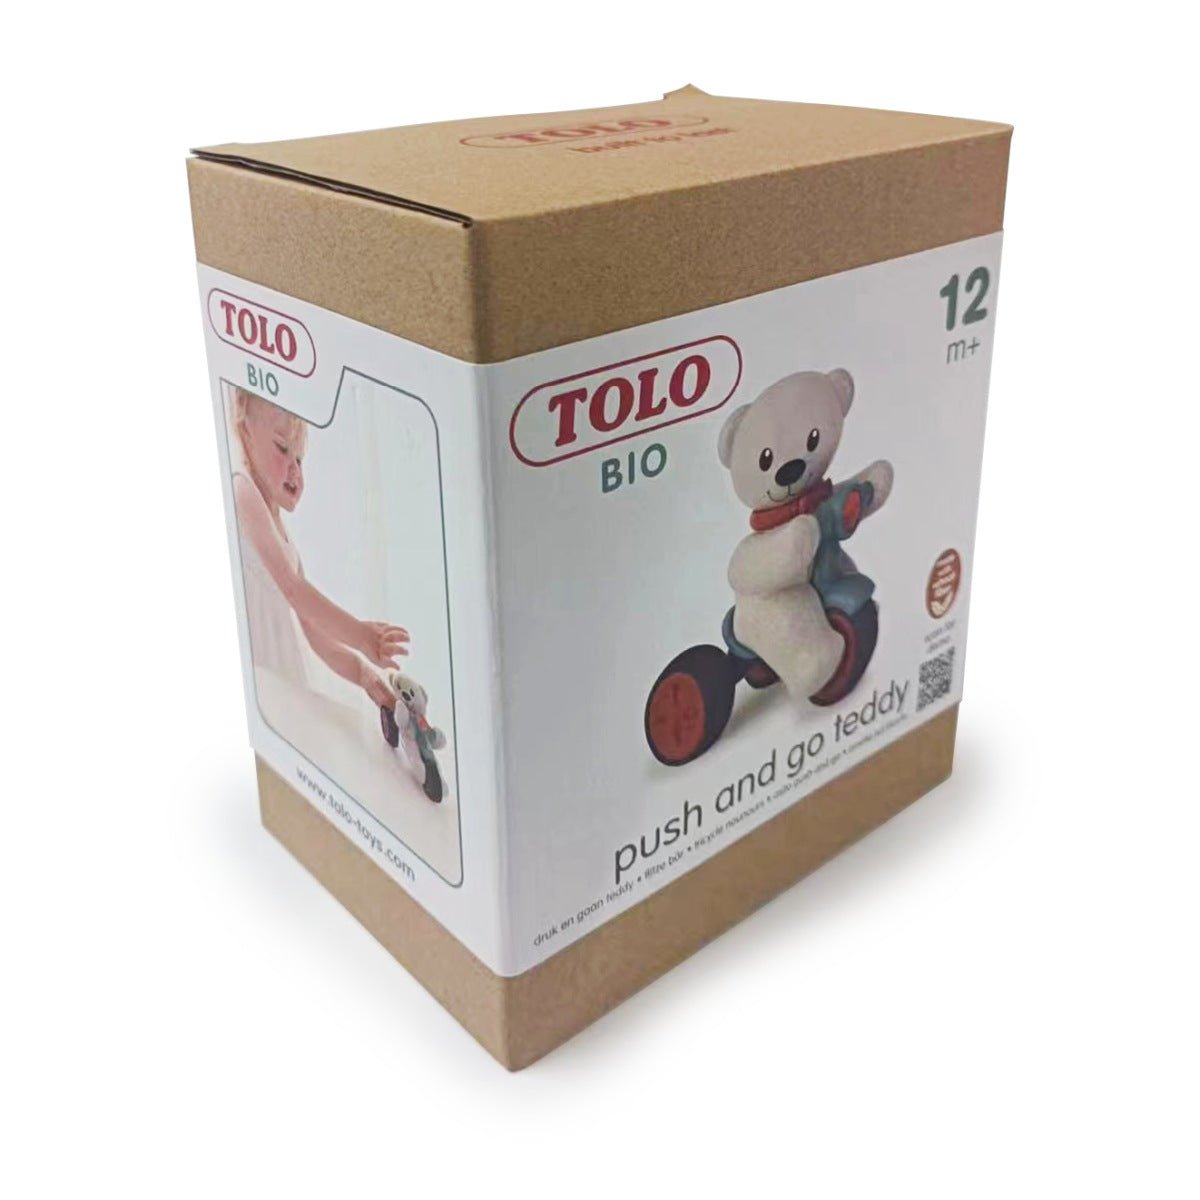 Tolo Bio Push & Go Teddy | Tolo Toys